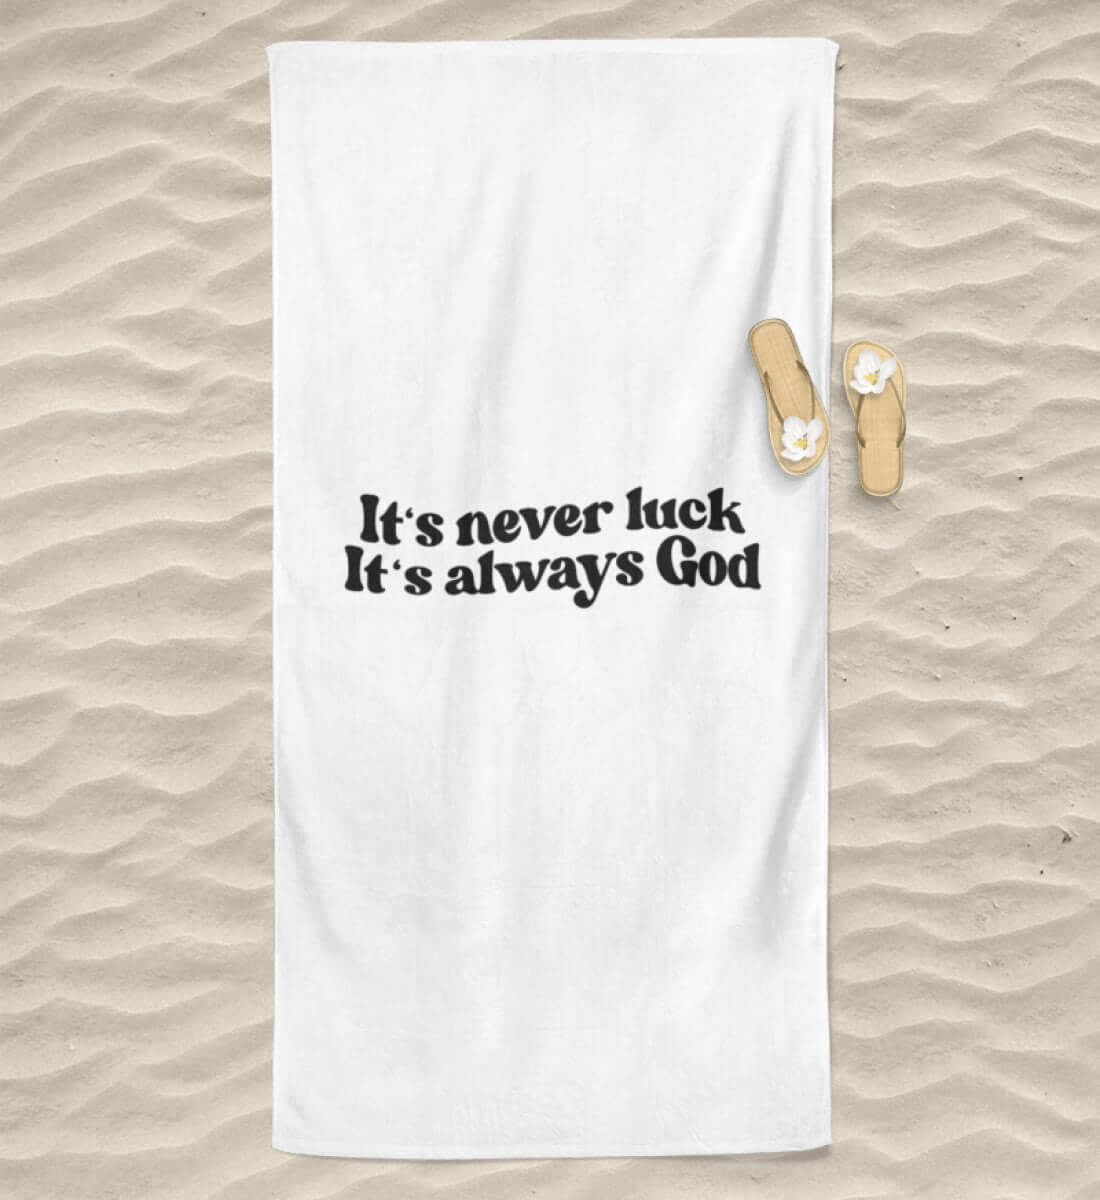 'IT'S NEVER LUCK IT'S ALWAYS GOD' BEACH TOWEL - GODVIBES